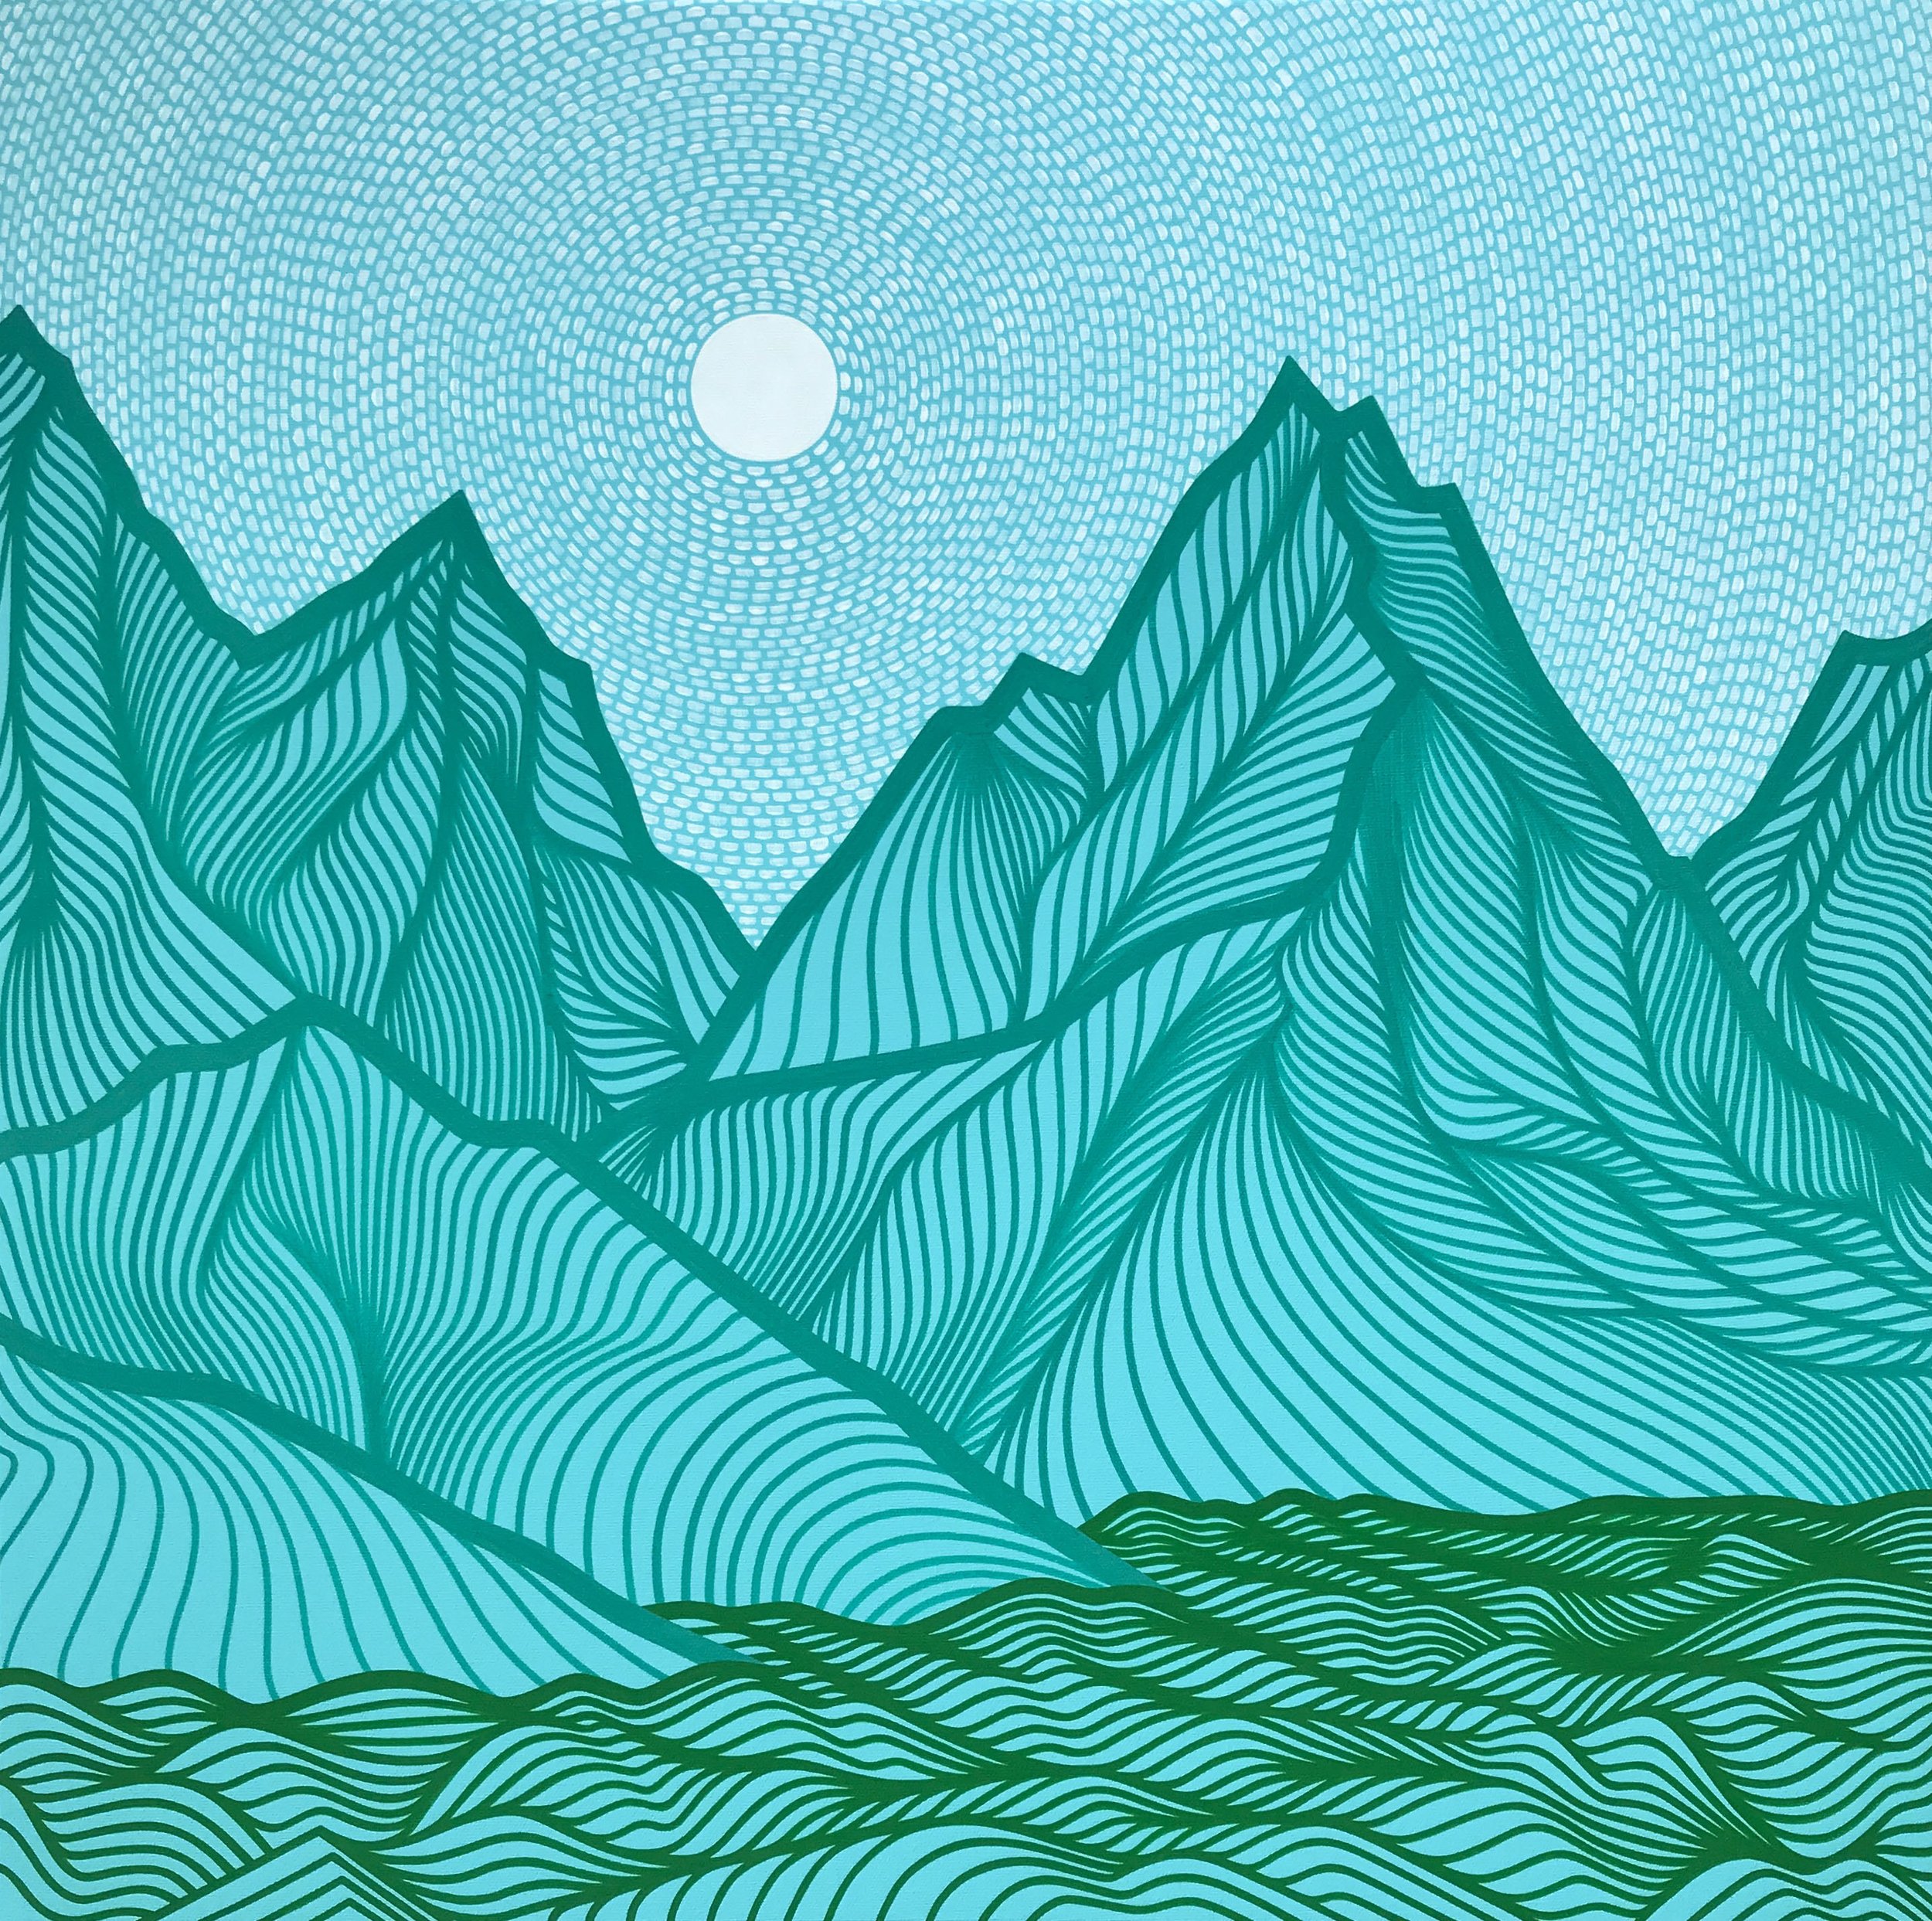 River Deep - Mountain High, acrylic on canvas, 24"x 24", available through Ashdale Gallery